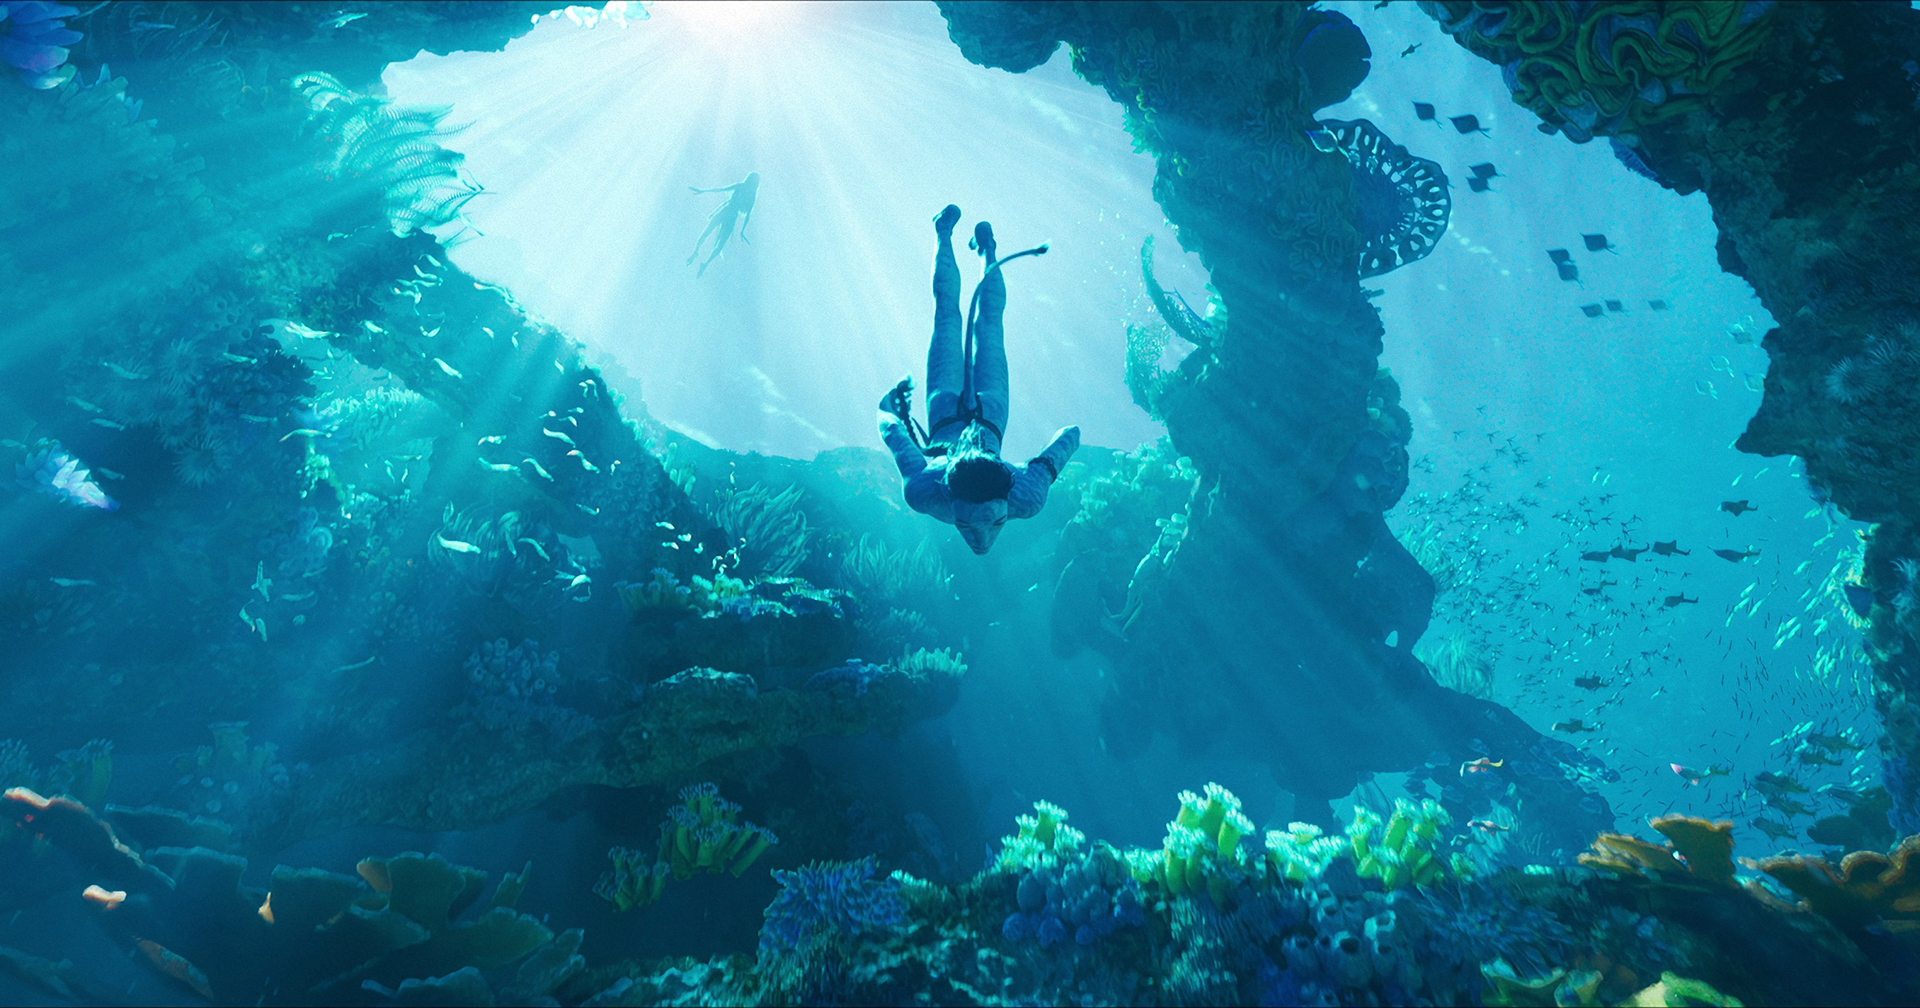 ‘Avatar: The Way of Water’ ทำสถิติรายได้ถึง 2,000 ล้านเหรียญ เป็นเรื่องที่ 6 ในประวัติศาสตร์